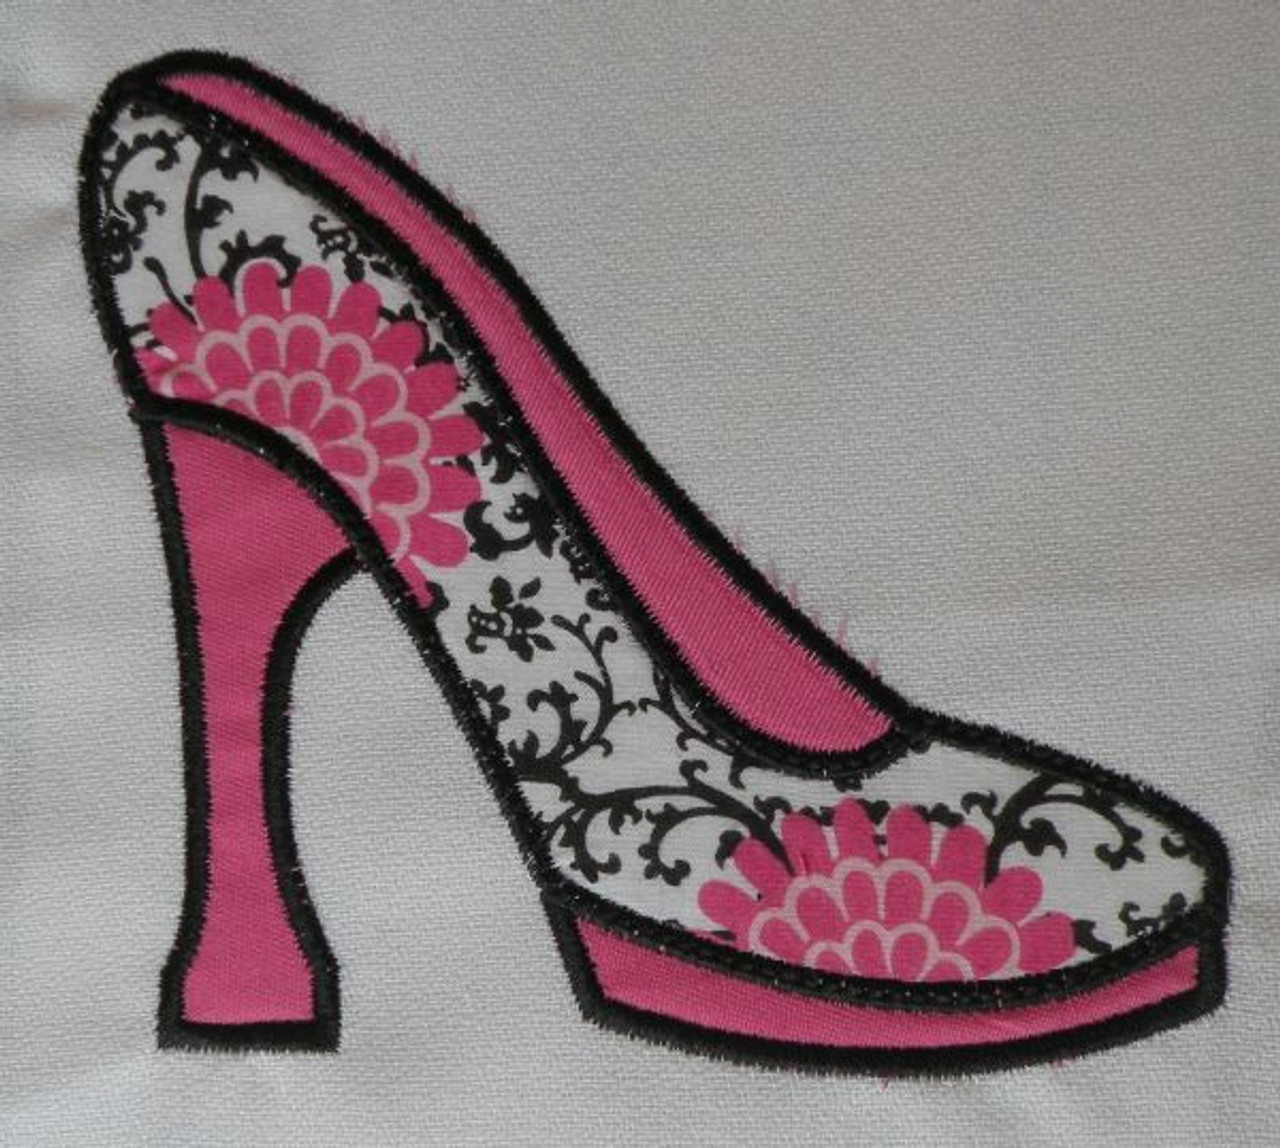 High Heel Shoe Applique Machine Embroidery Design